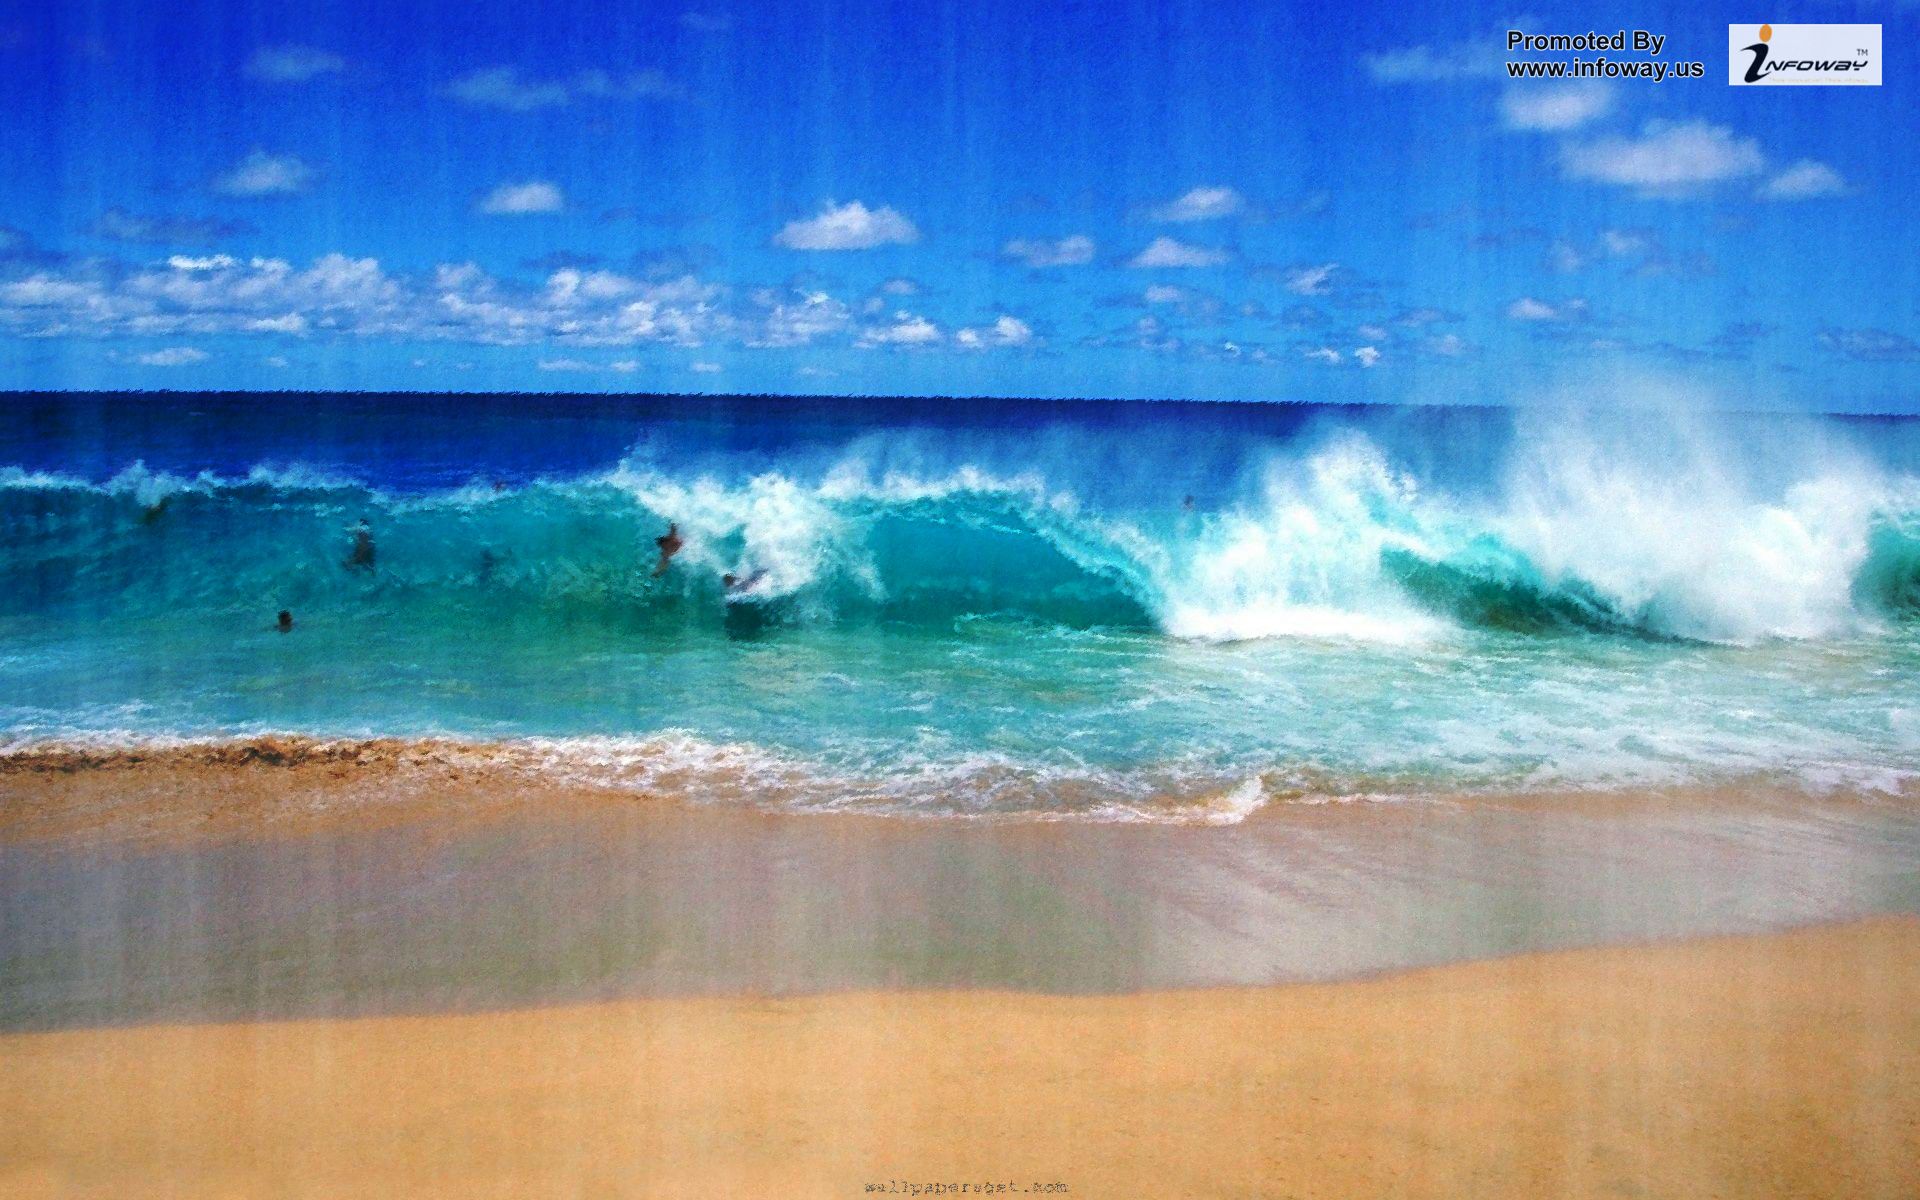  ocean surf swimming beautiful scenery hd wallpapers beautiful ocean 1920x1200